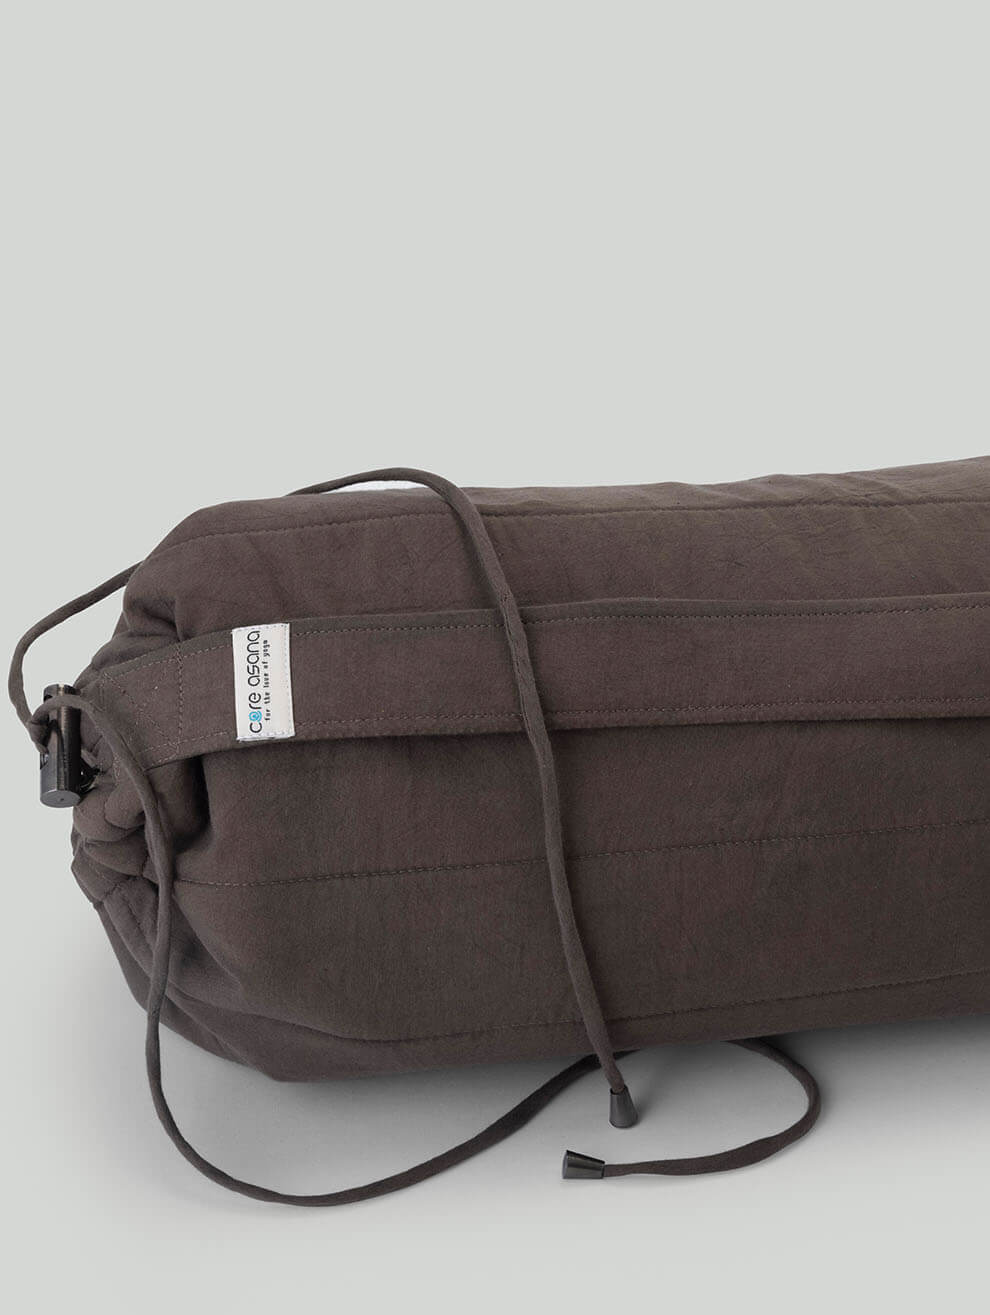 Yoga Mat Carrier, Organizational Yoga Bag